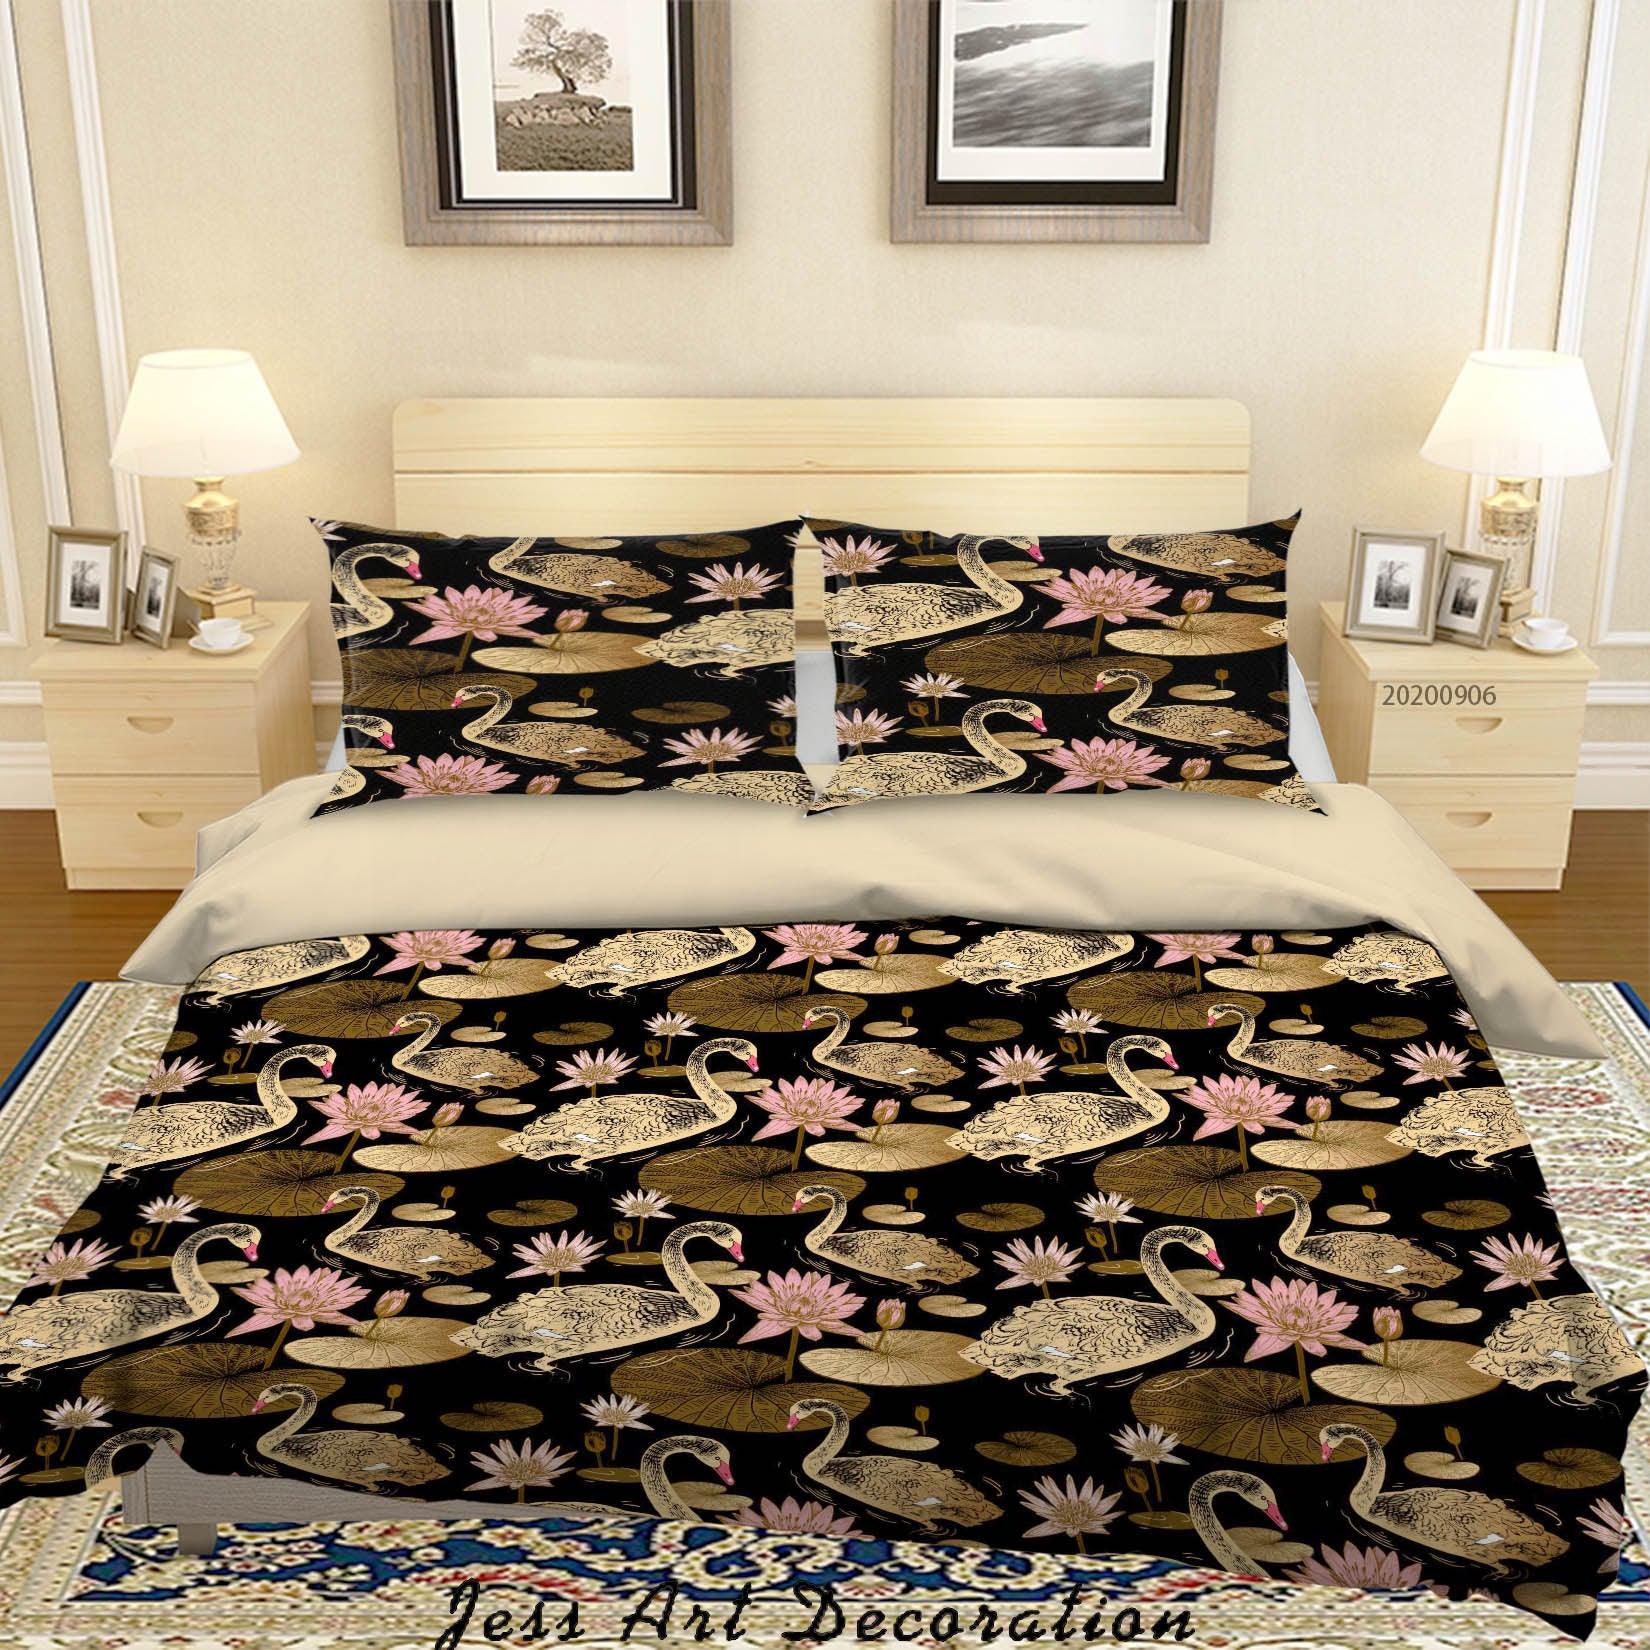 3D Vintage Leaves Swan Lotus Floral Pattern Quilt Cover Set Bedding Set Duvet Cover Pillowcases WJ 3638- Jess Art Decoration